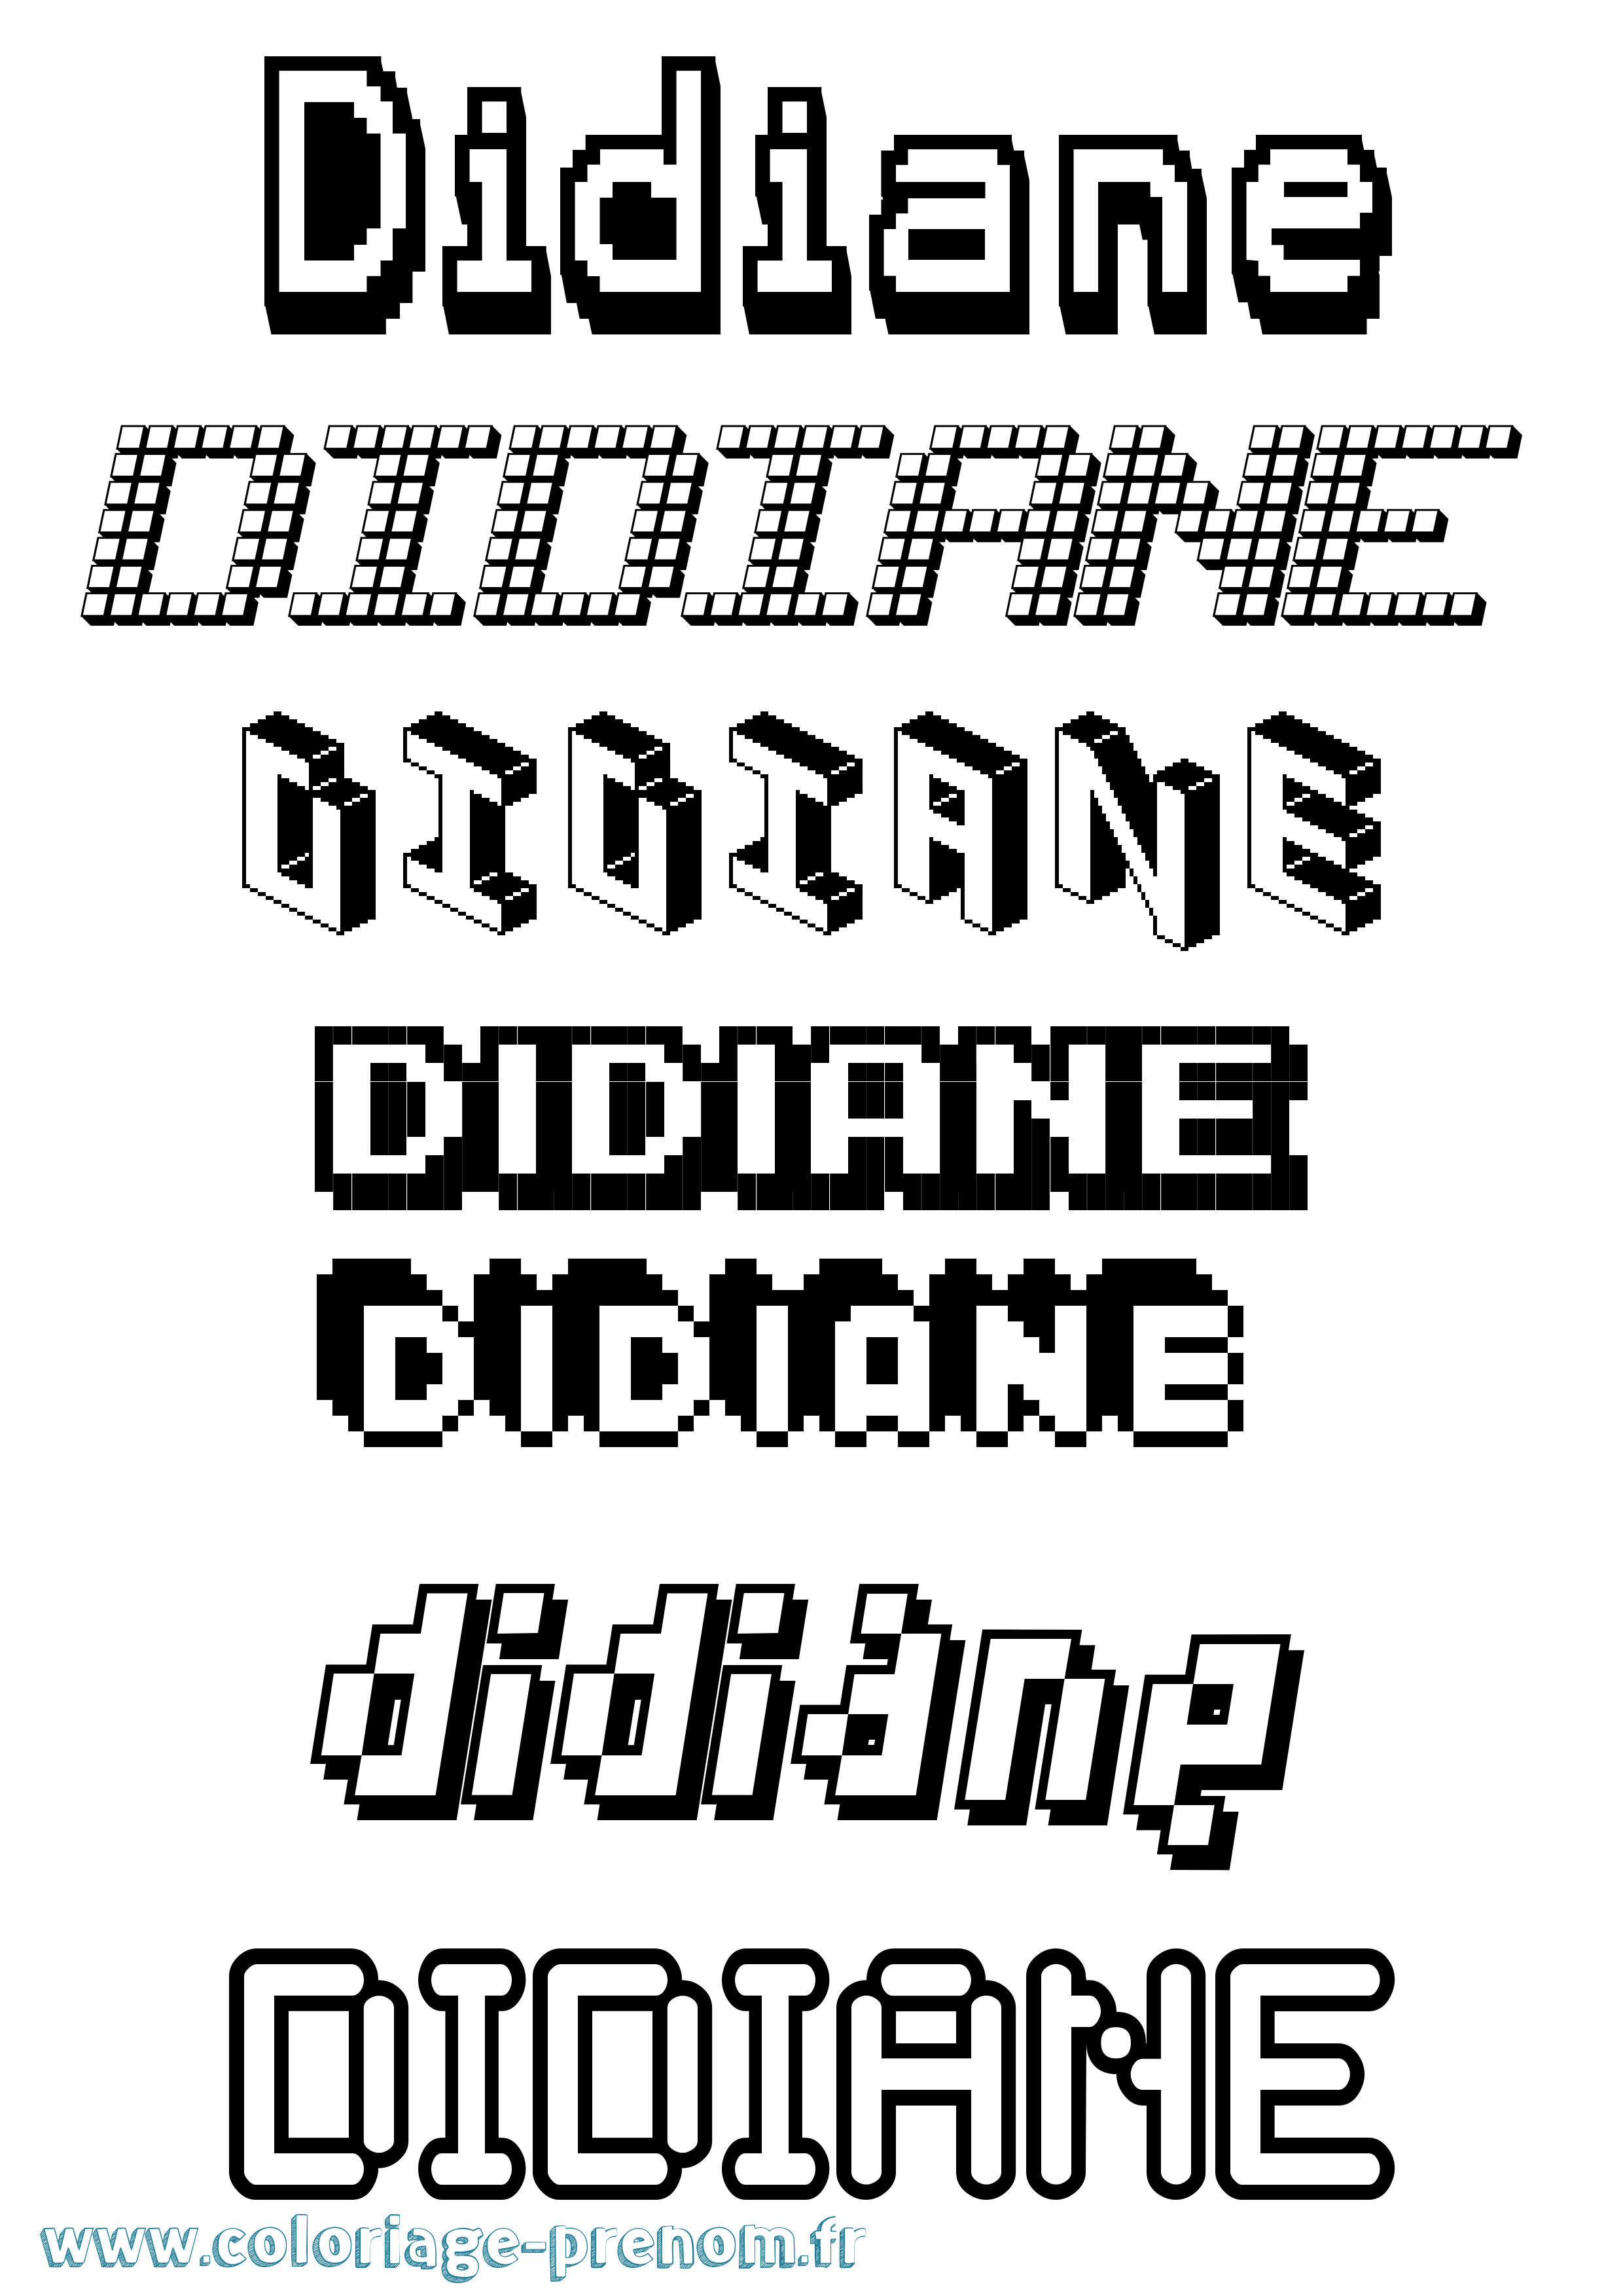 Coloriage prénom Didiane Pixel